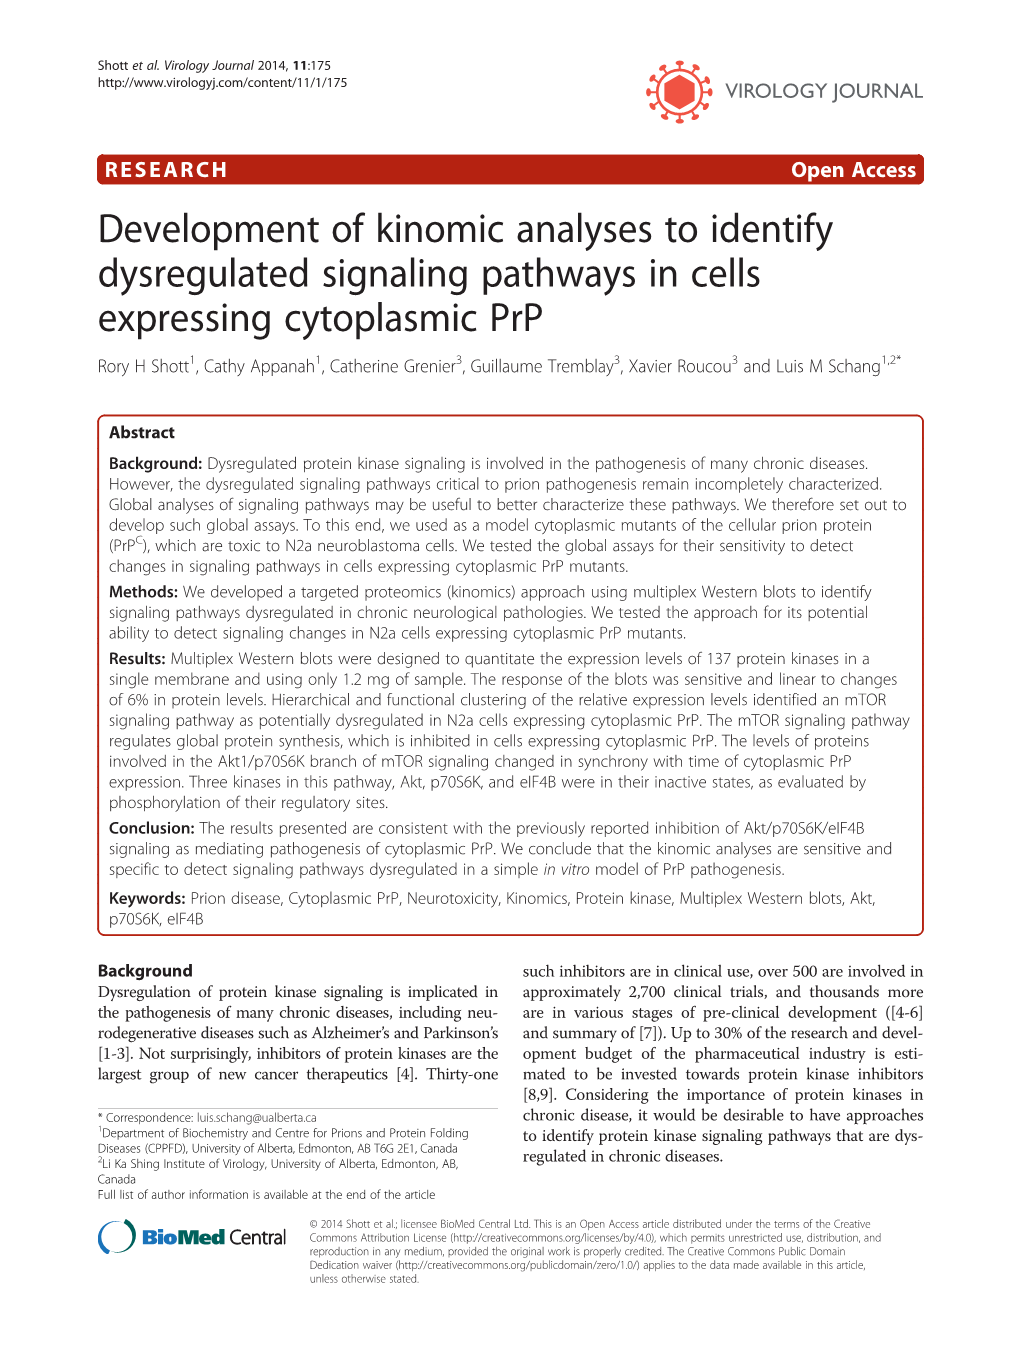 Development of Kinomic Analyses to Identify Dysregulated Signaling